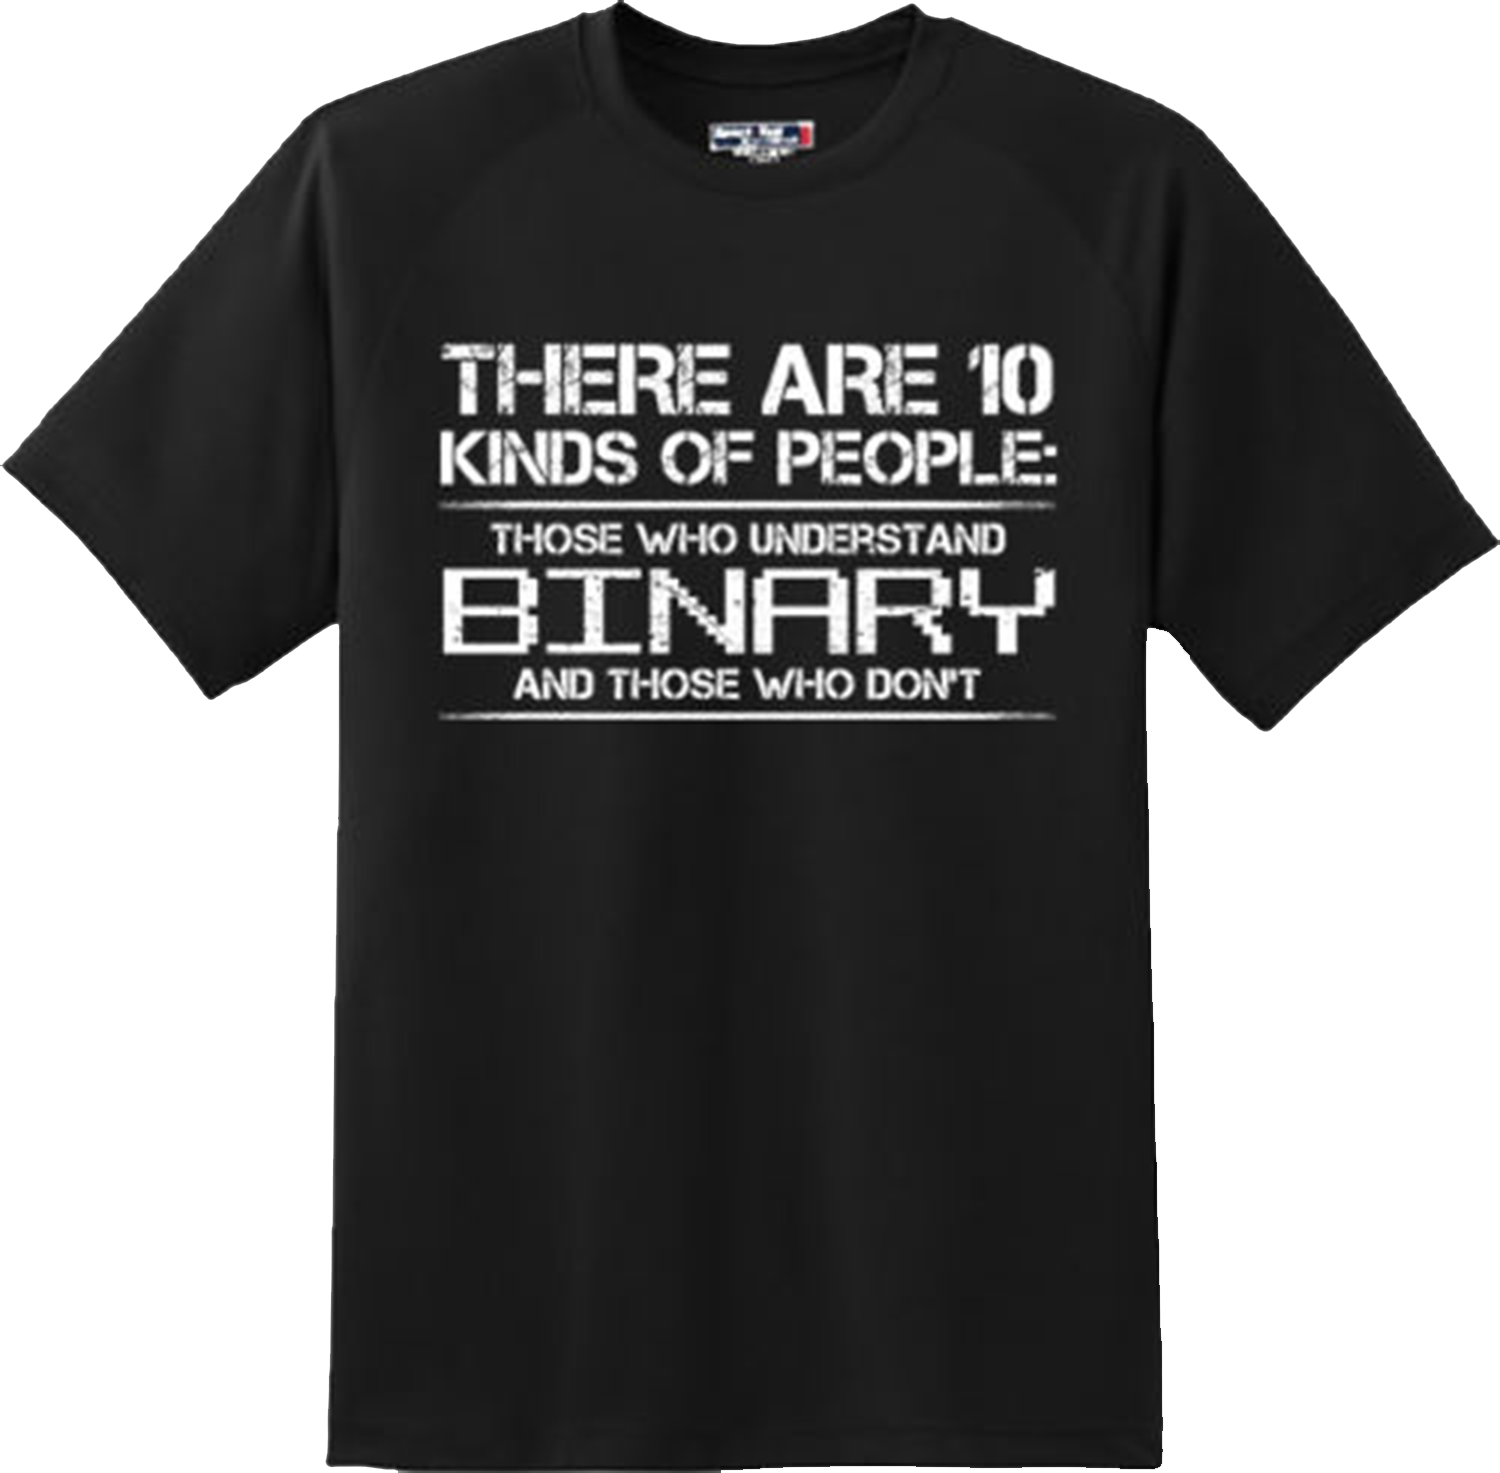 Funny Binary Computer College Geek Nerd Network T Shirt New Graphic Tee